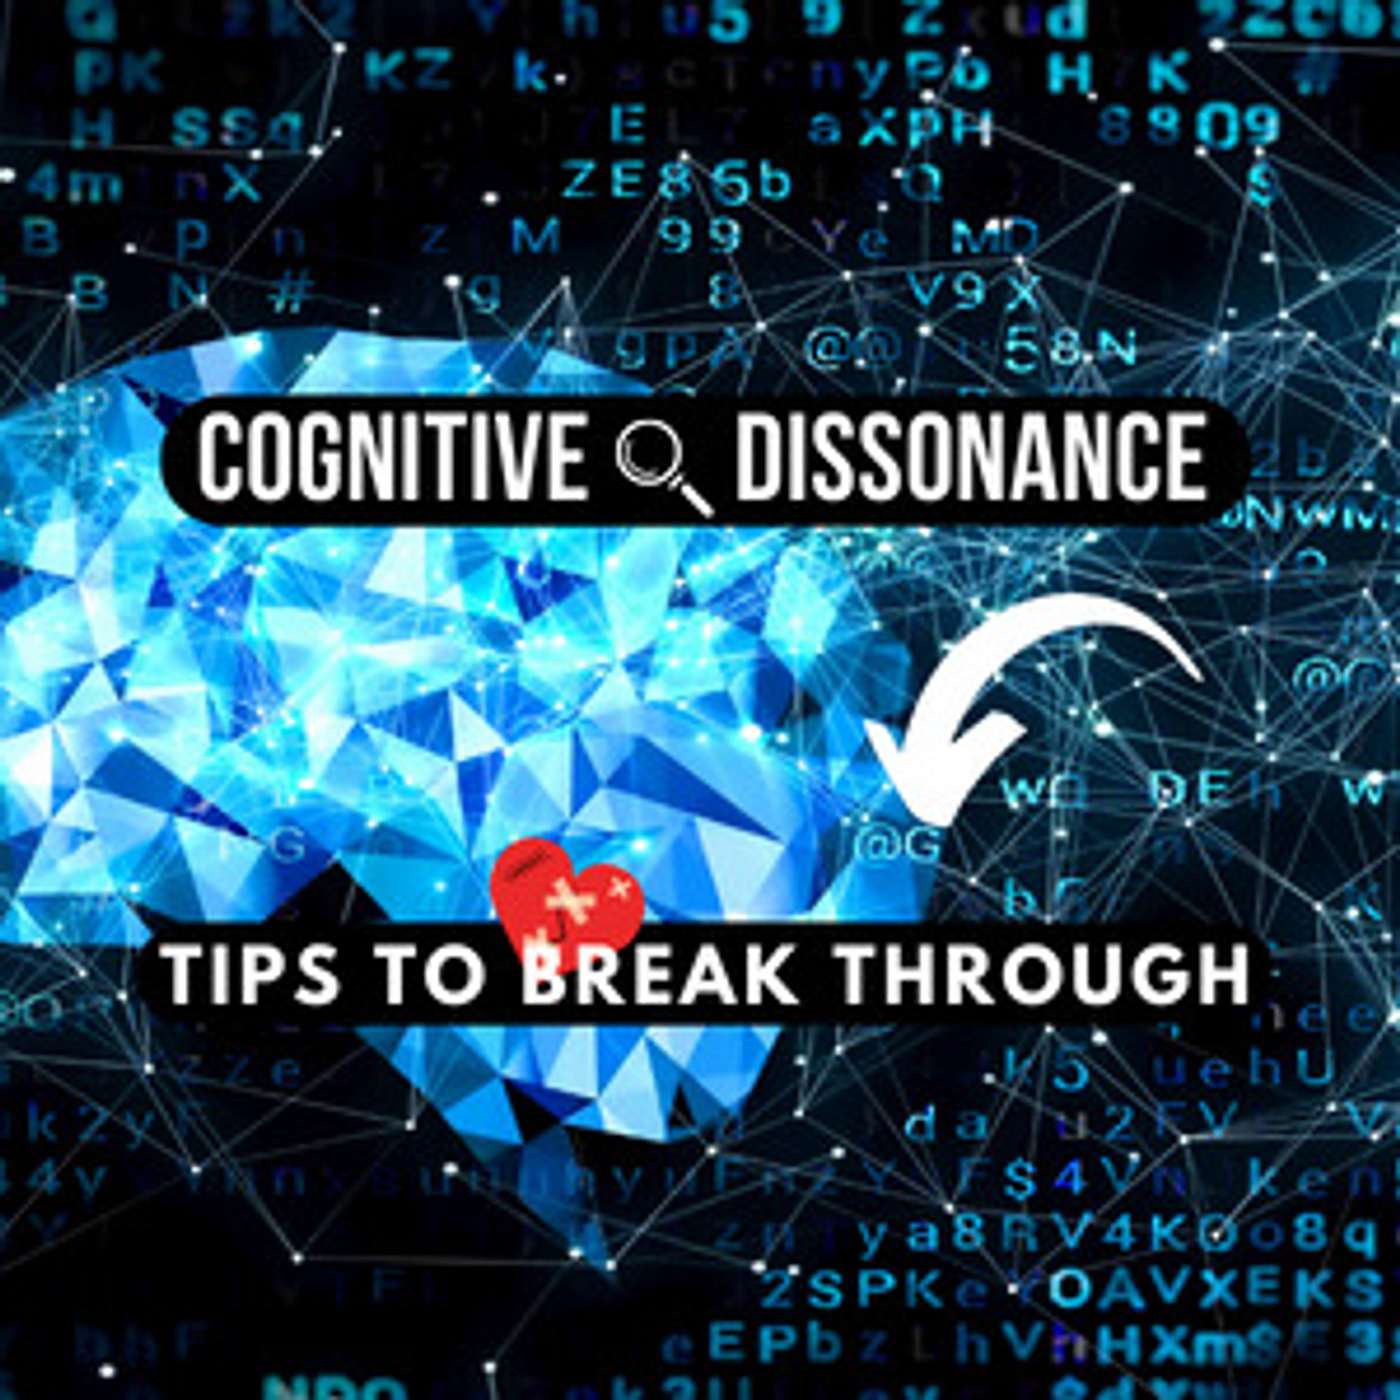 Breaking Through: 7 Clear Ways to Break Through Cognitive Dissonance